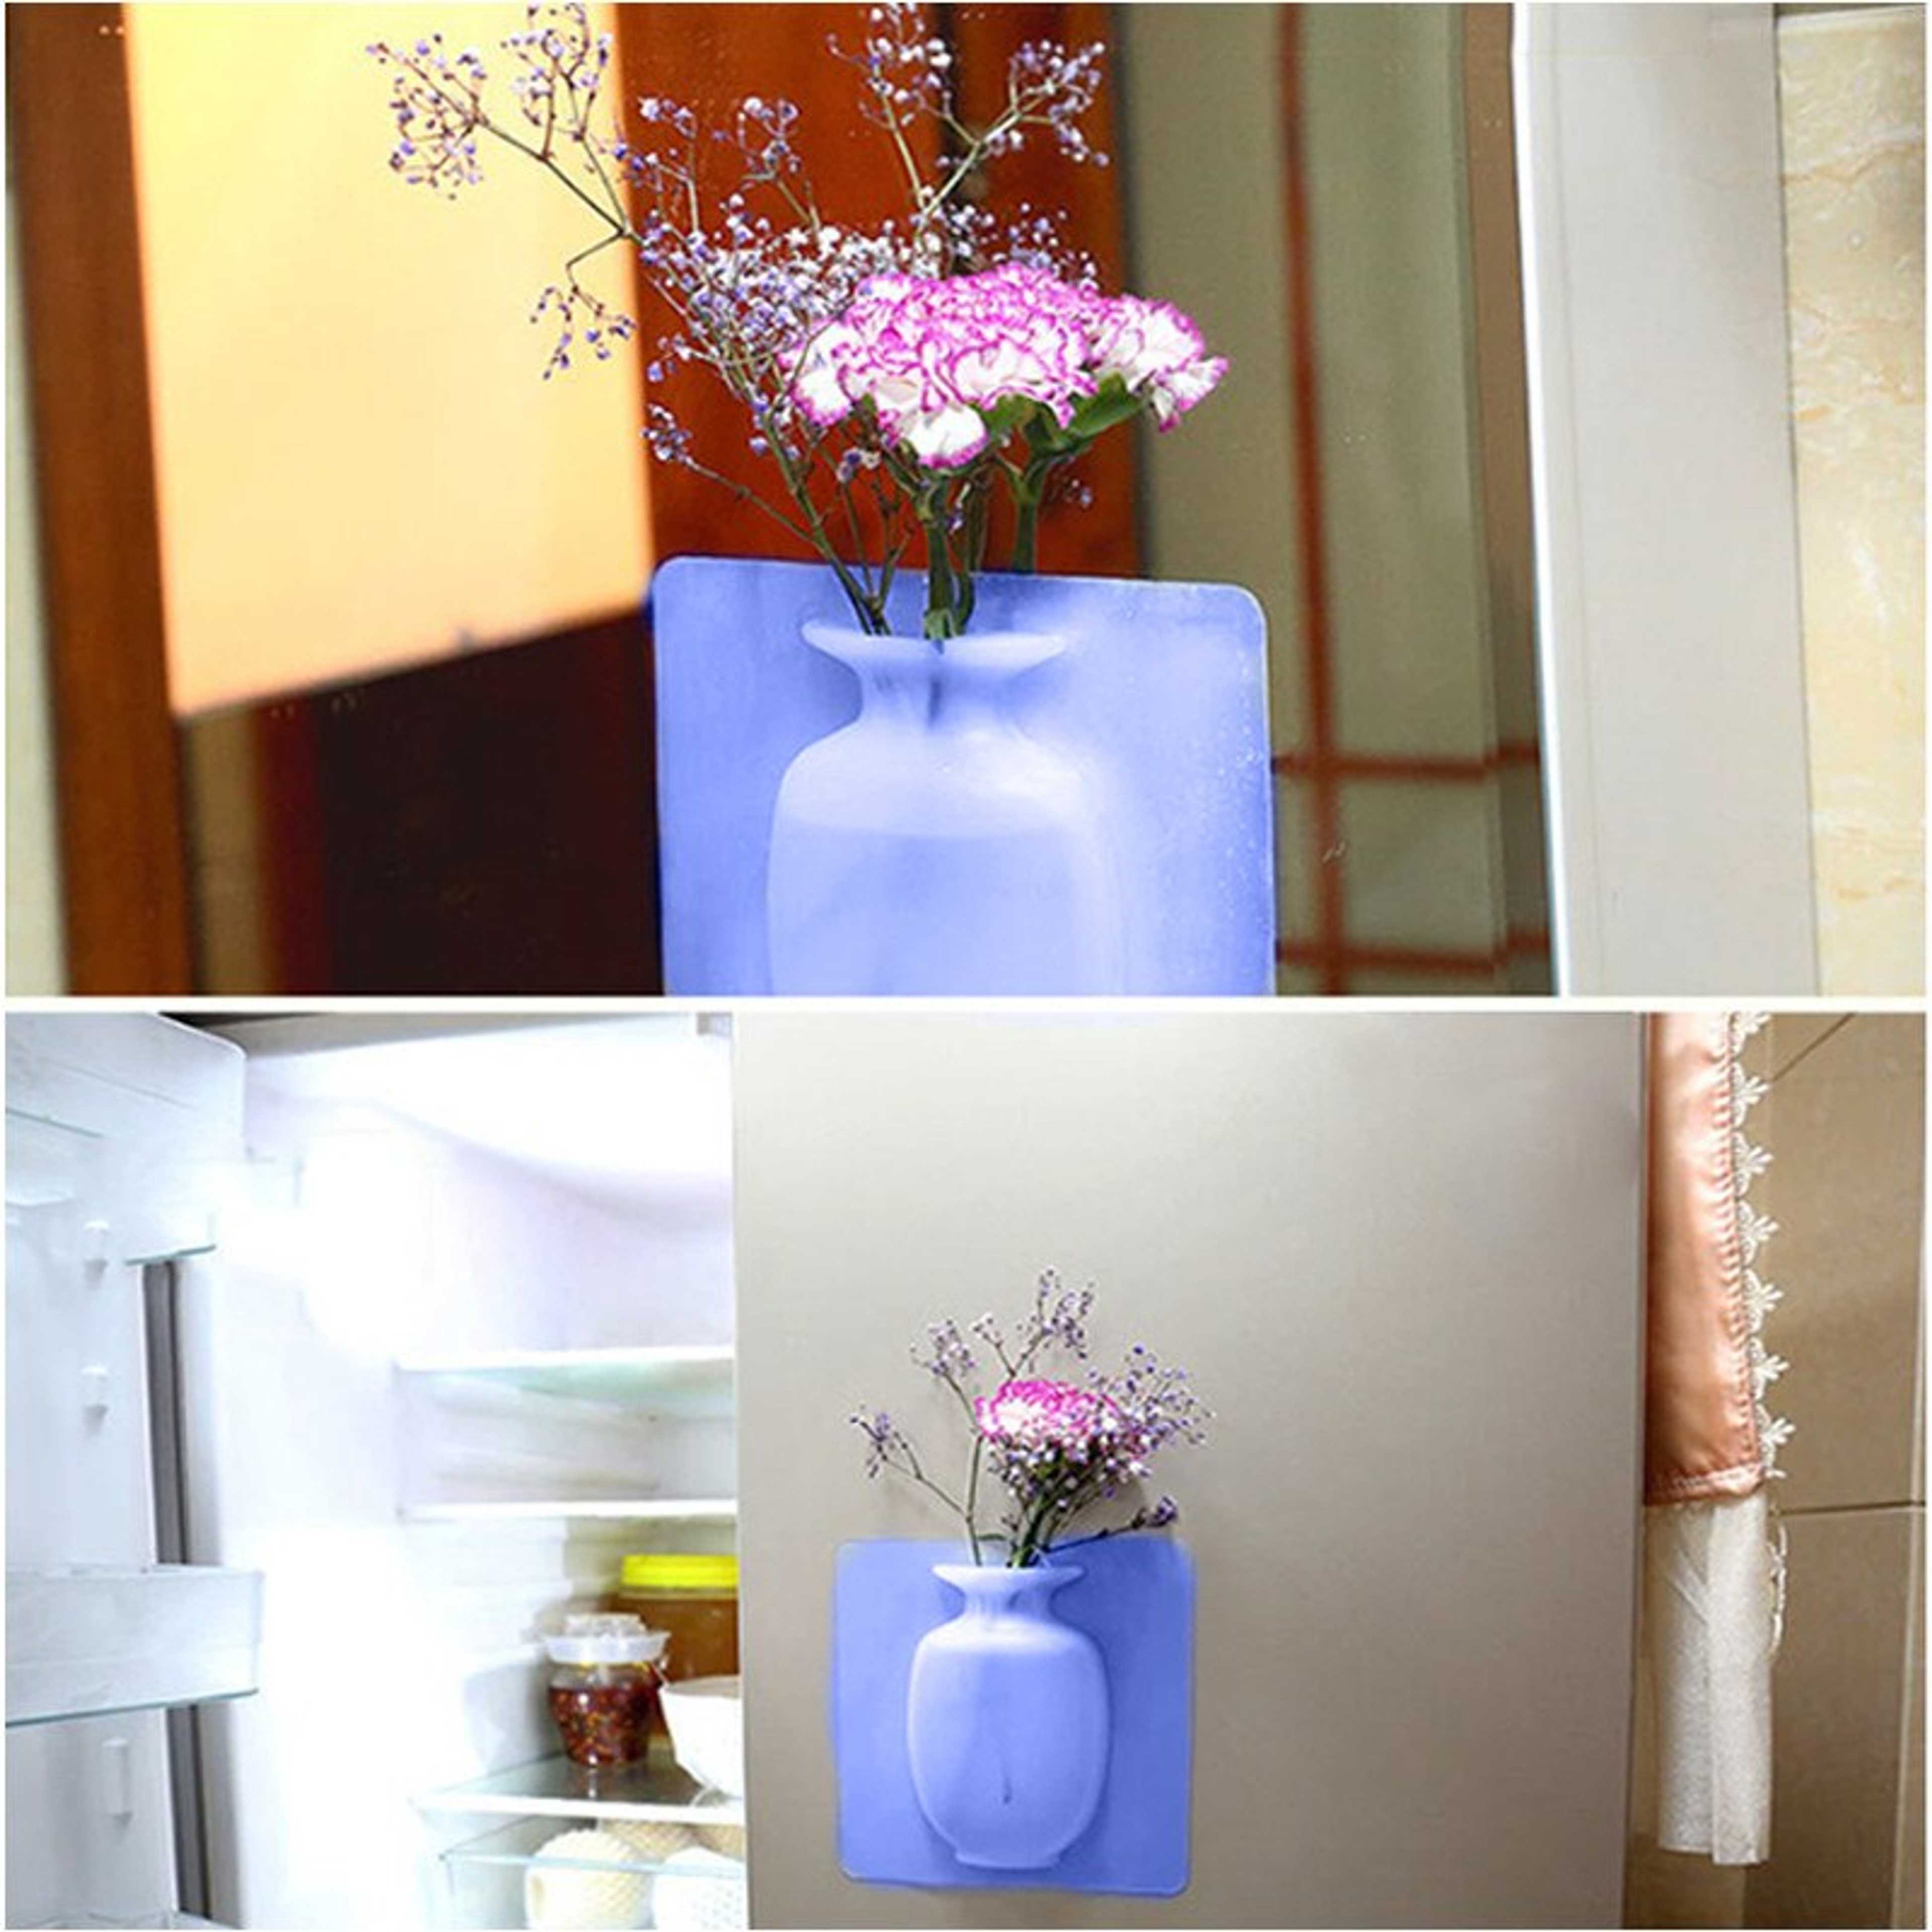 Sticky Vase Wall Mounted Plant Holder Decorative Flower Display Vase Wall Decor